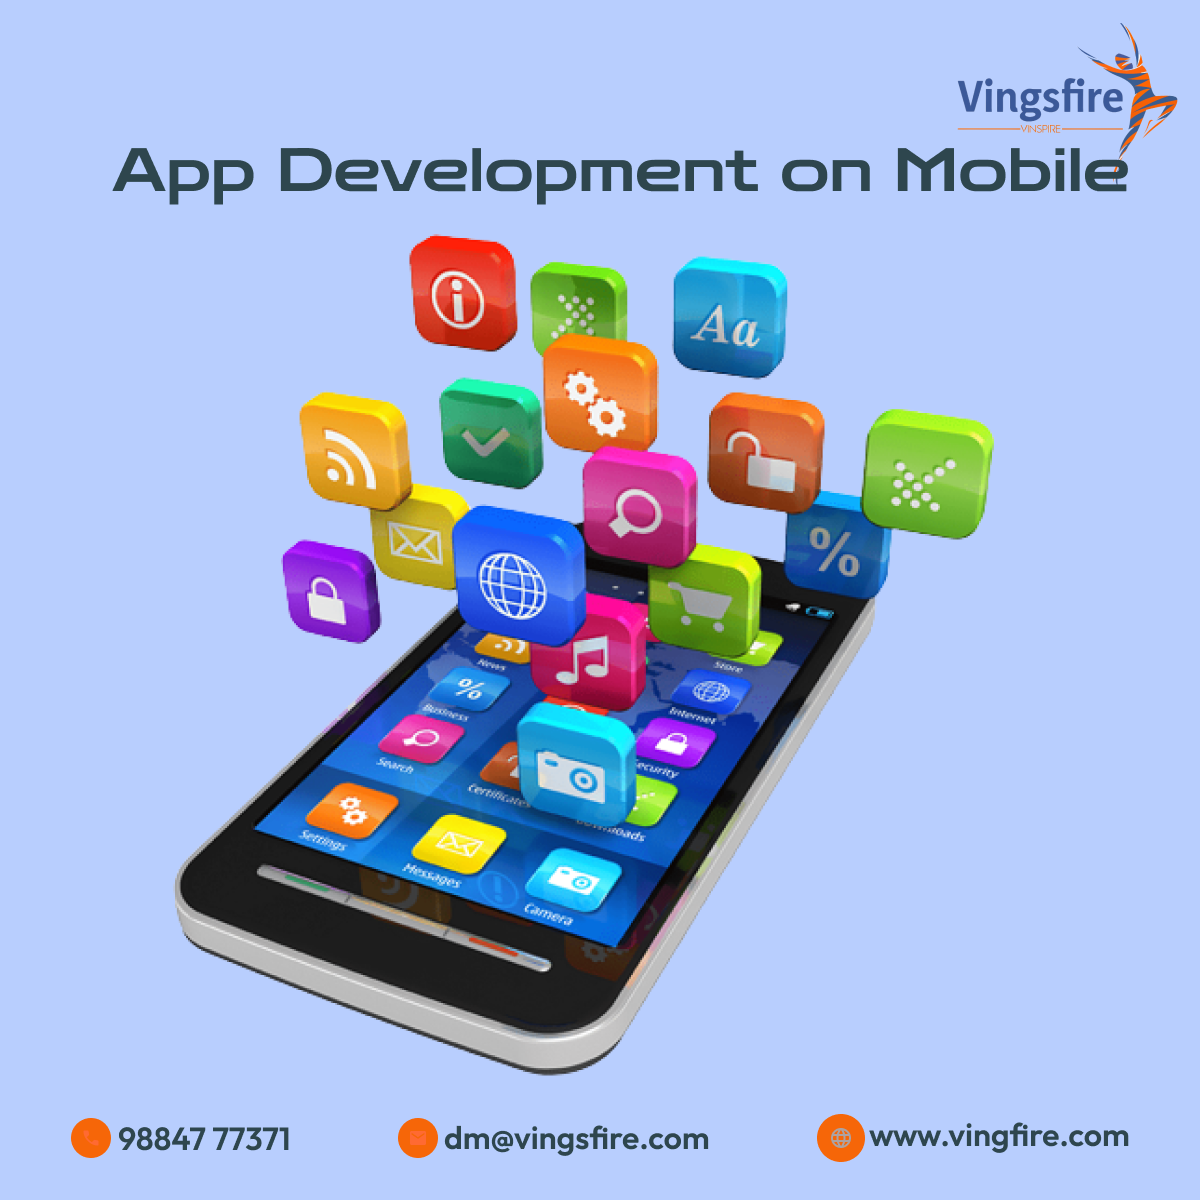 App development on mobile